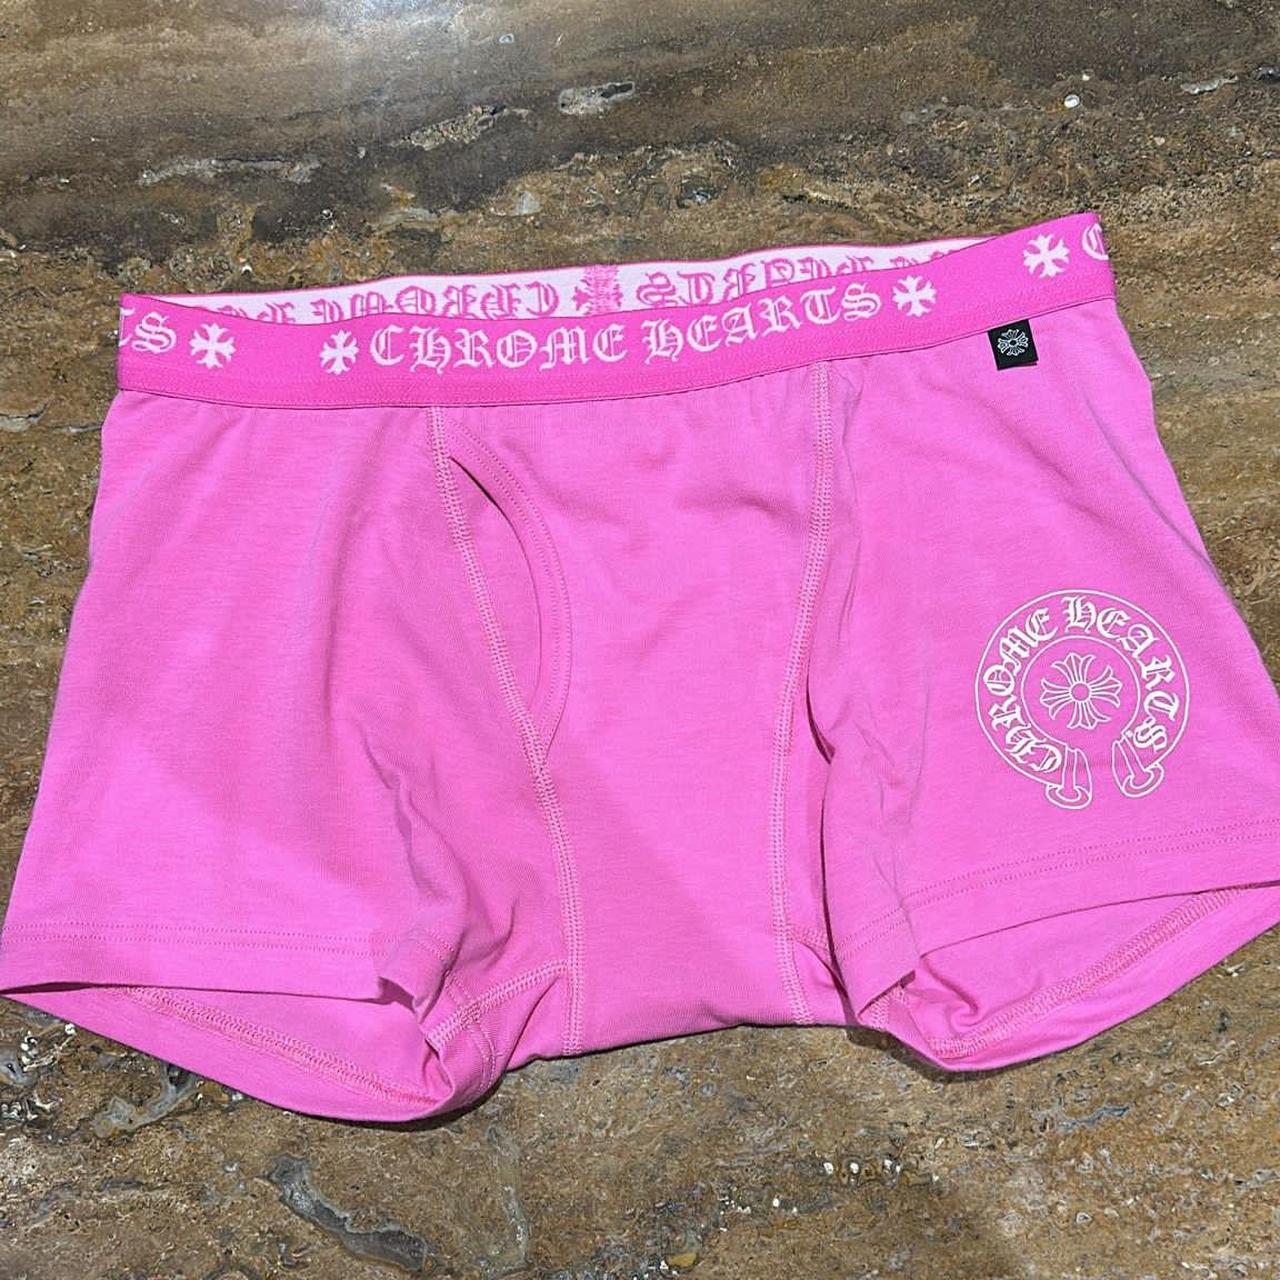 Chrome Hearts Boxer Brief Shorts Pink